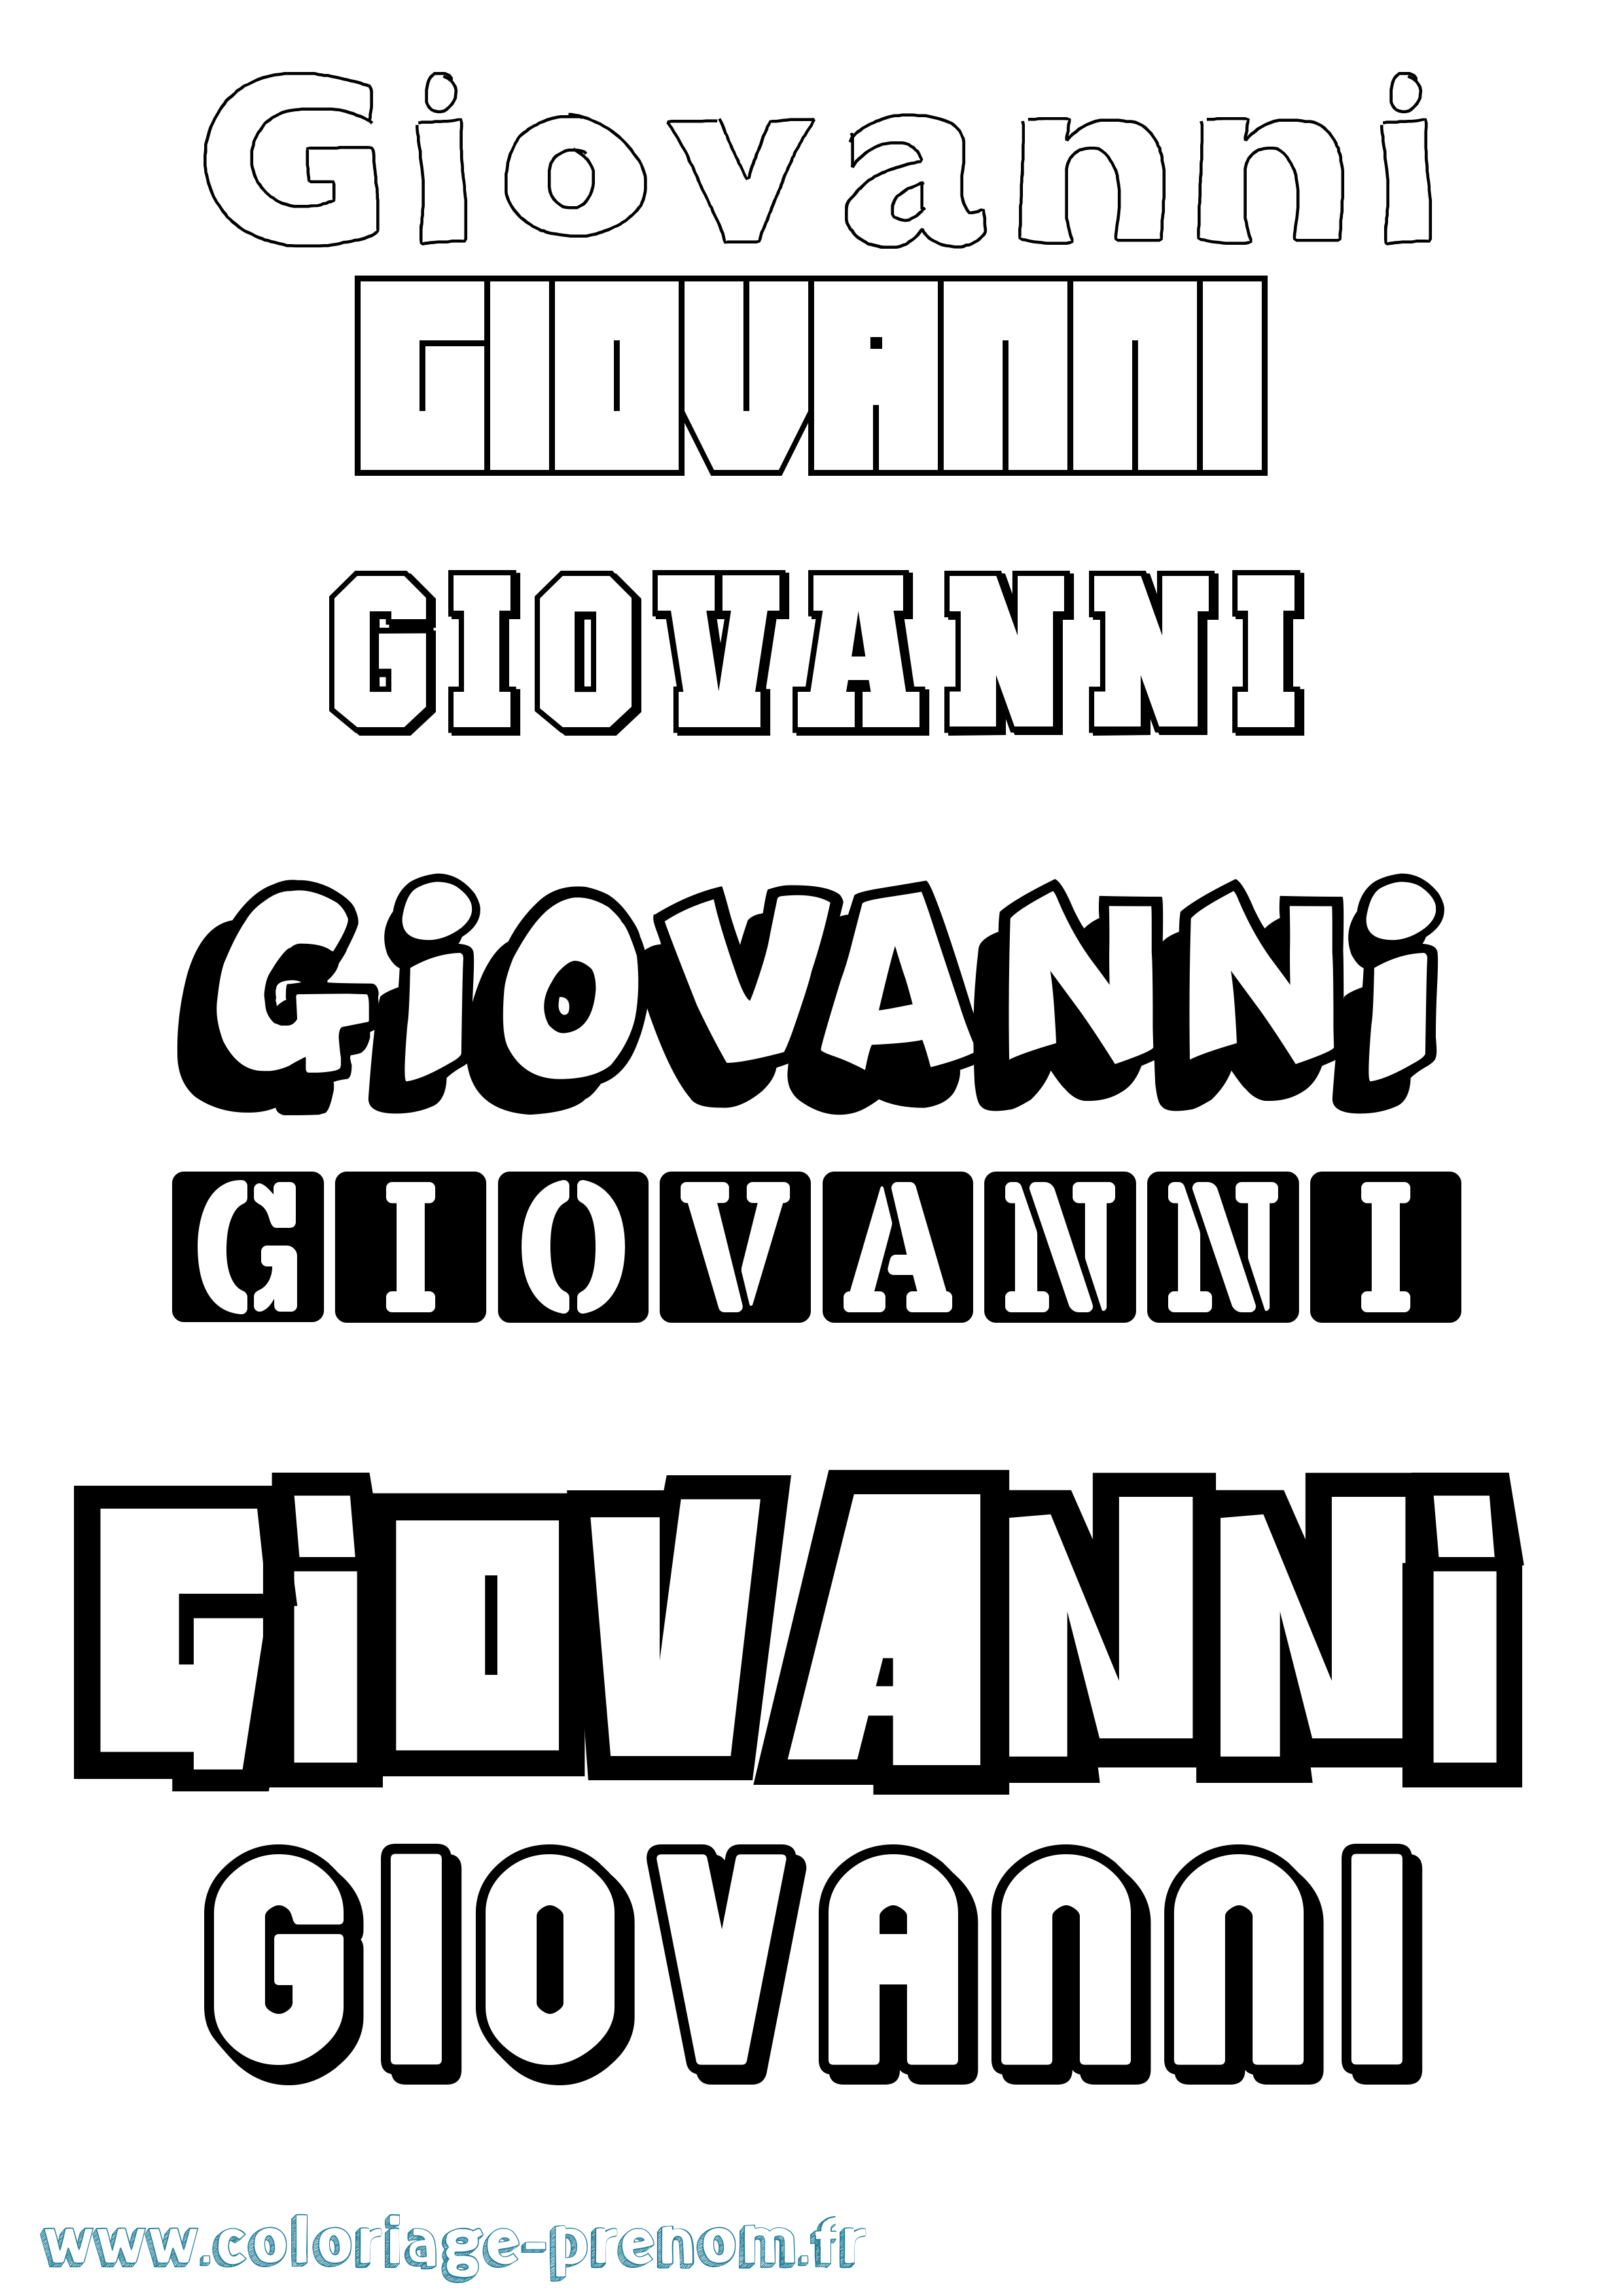 Coloriage prénom Giovanni Simple